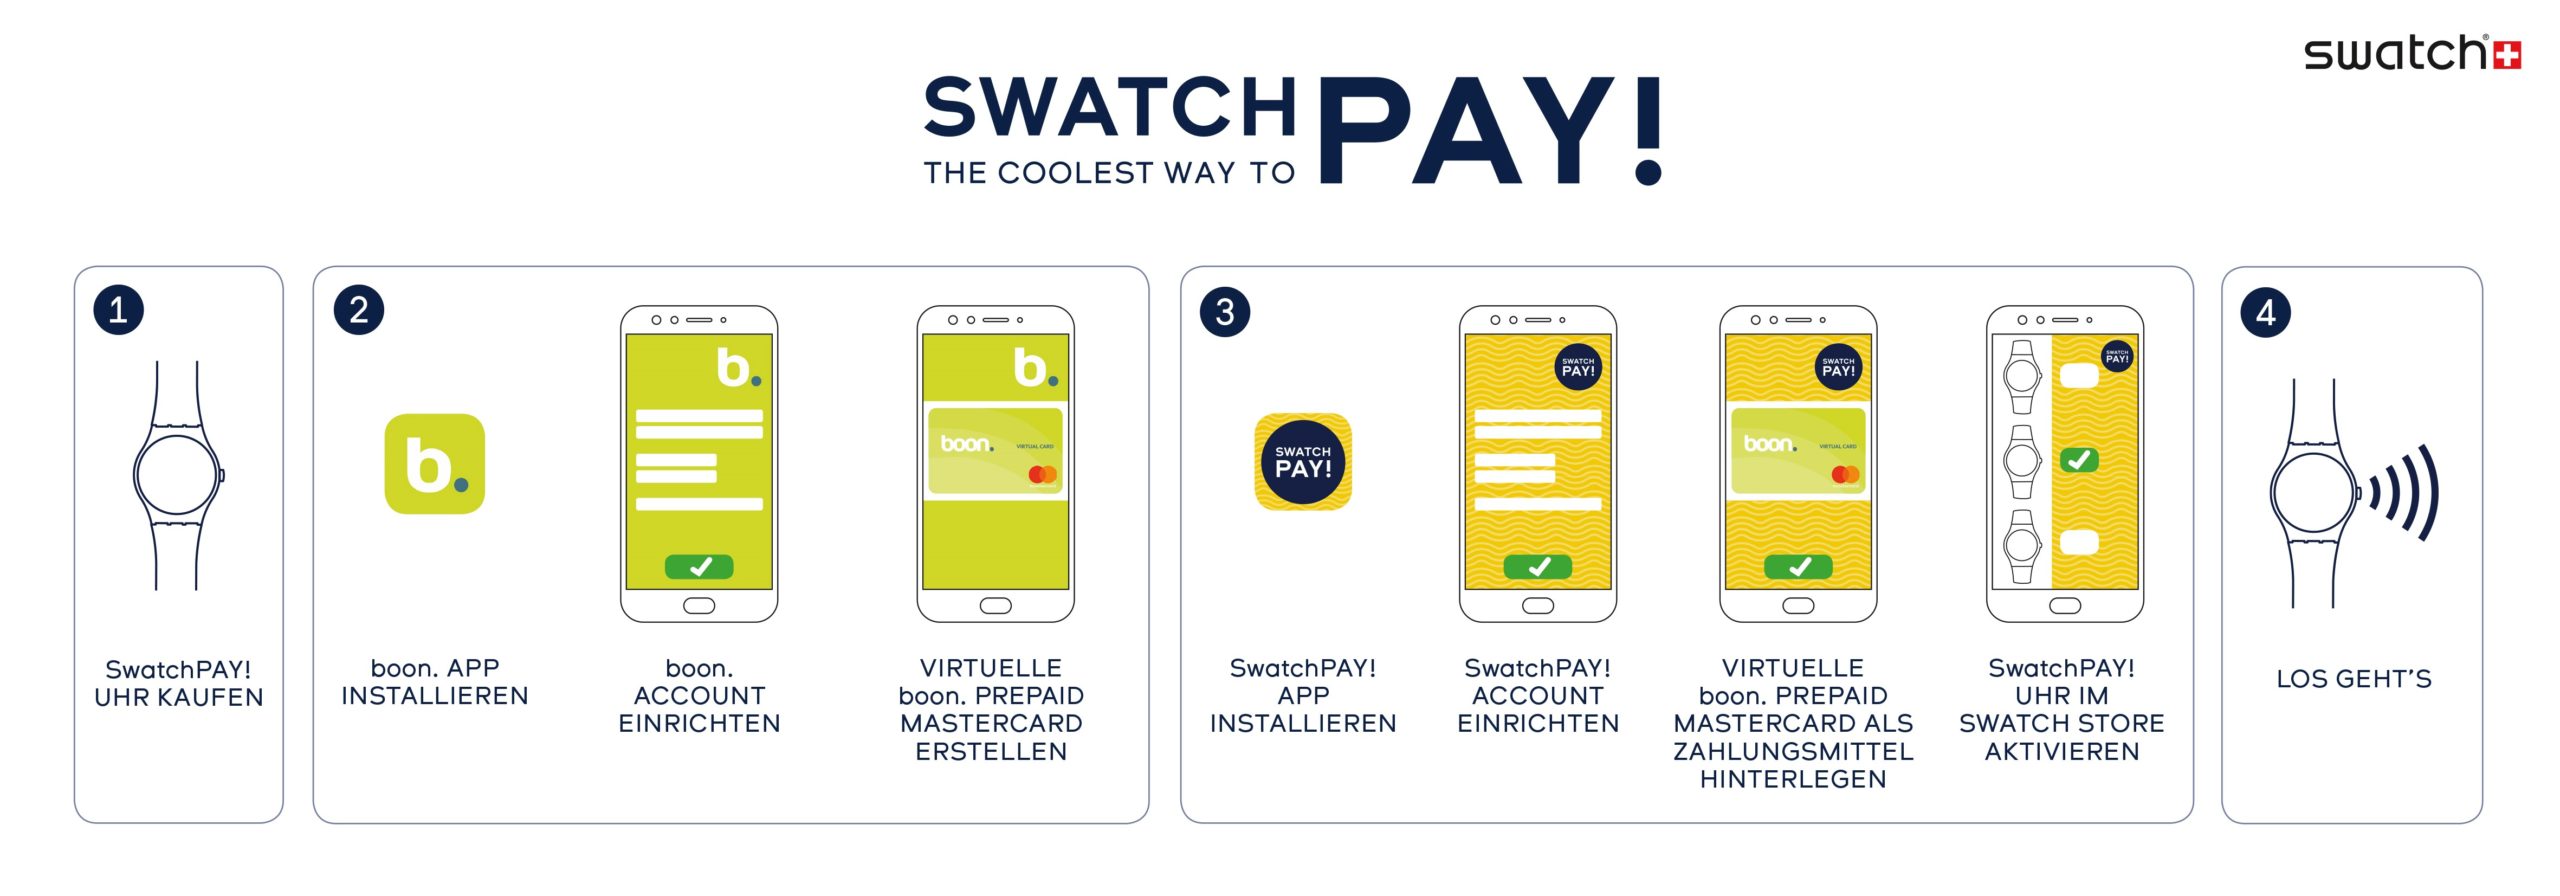 Infografik Swatch Pay